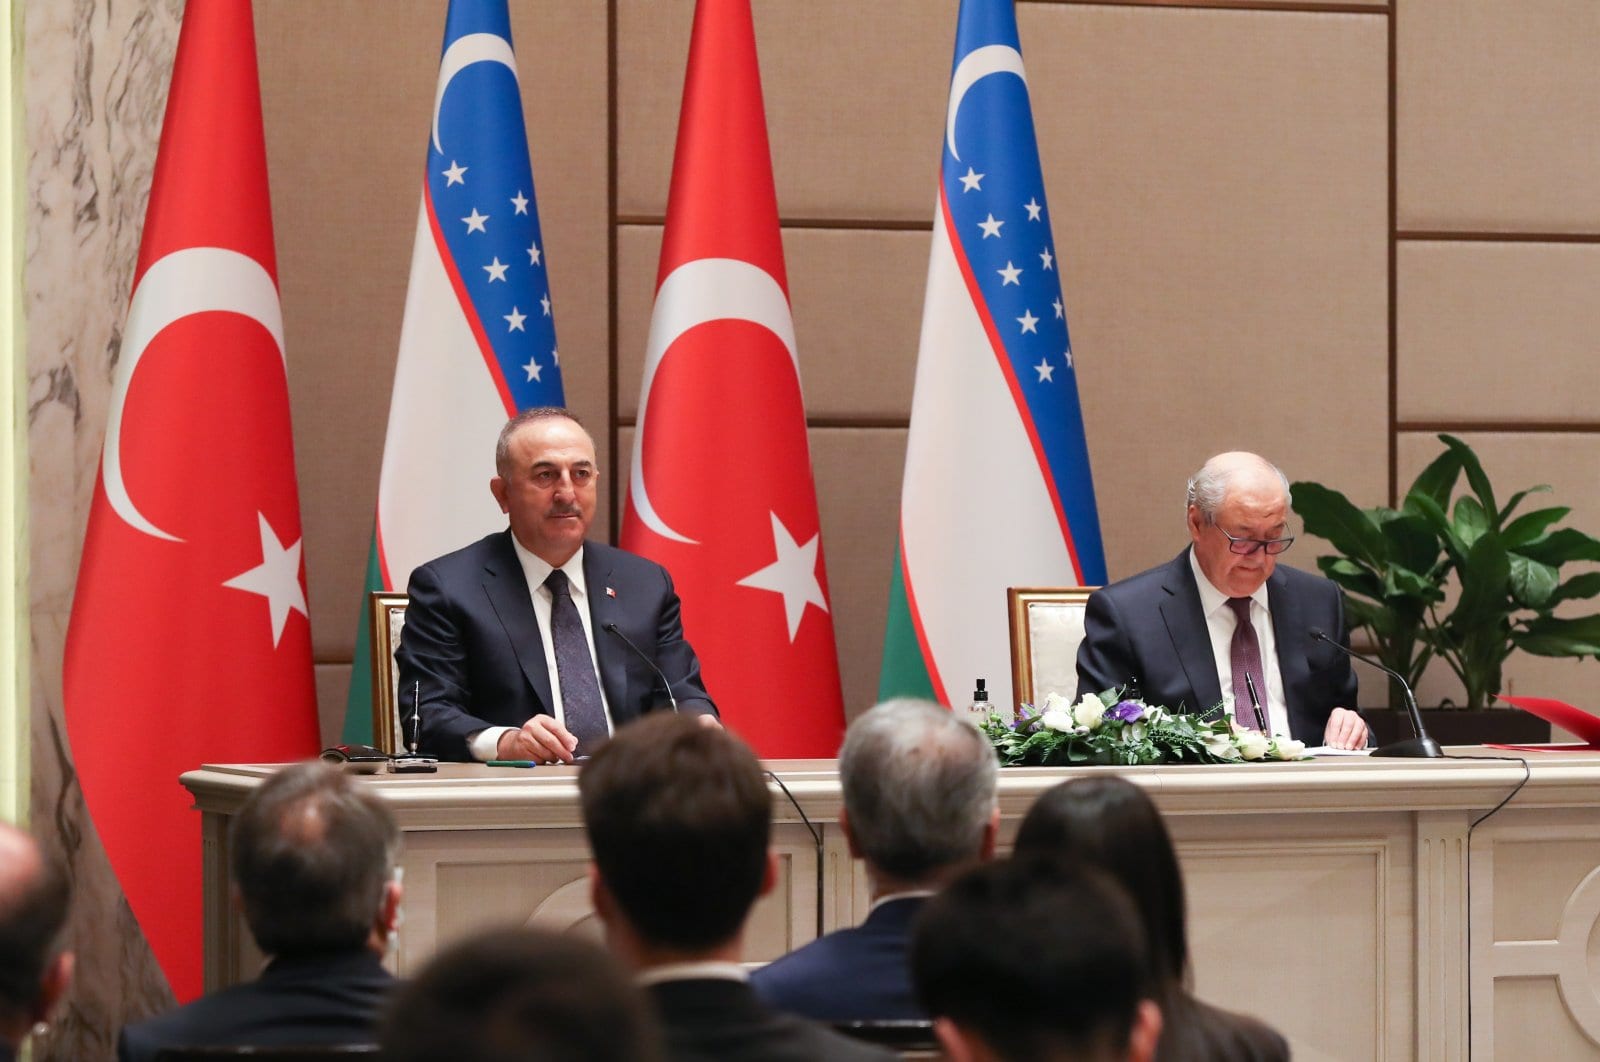 Turkey, Uzbekistan sign deal to improve bilateral relations, economic cooperation